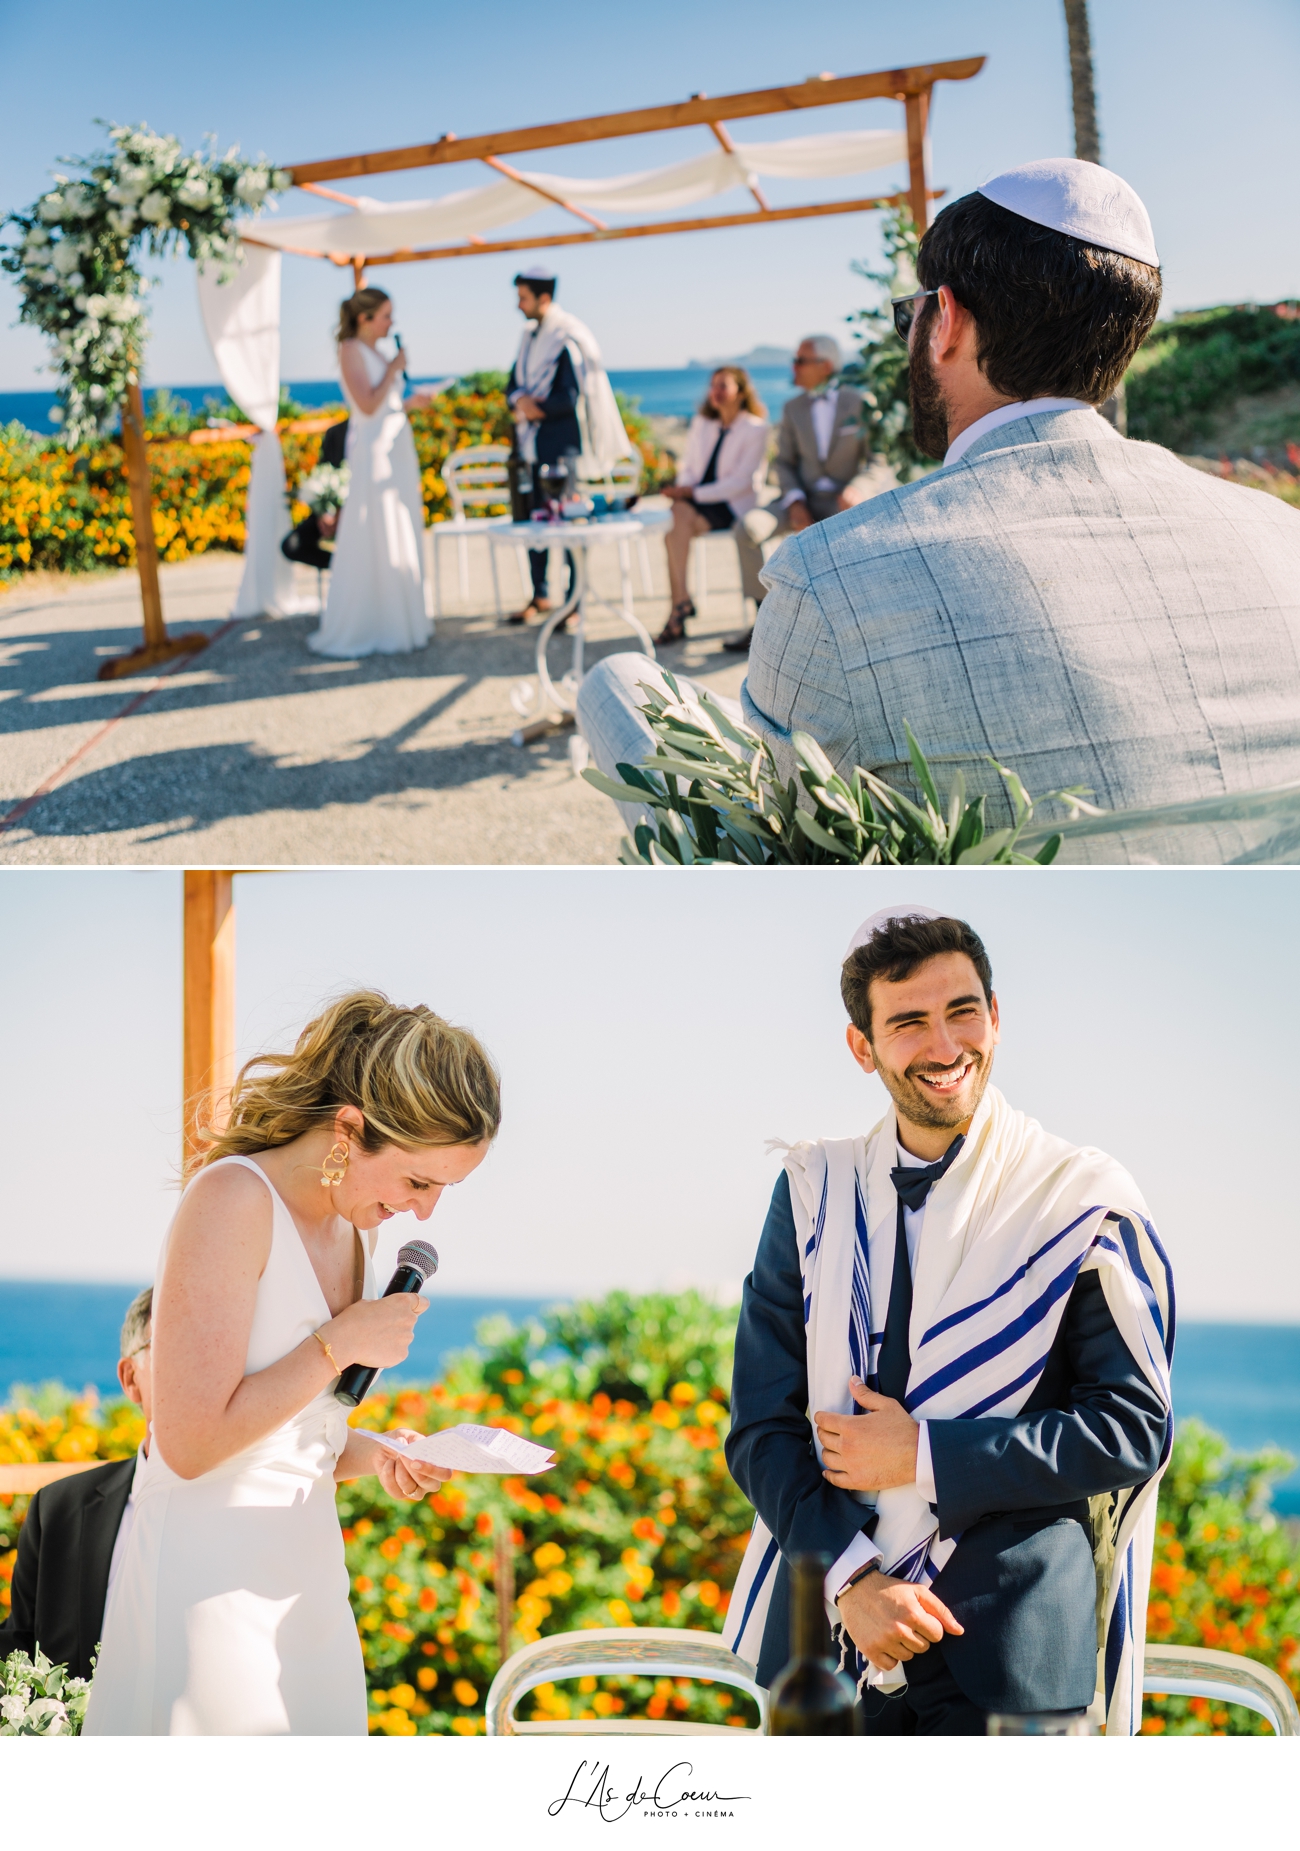 Photographe mariage grece wedding photographer greece cérémonie juive